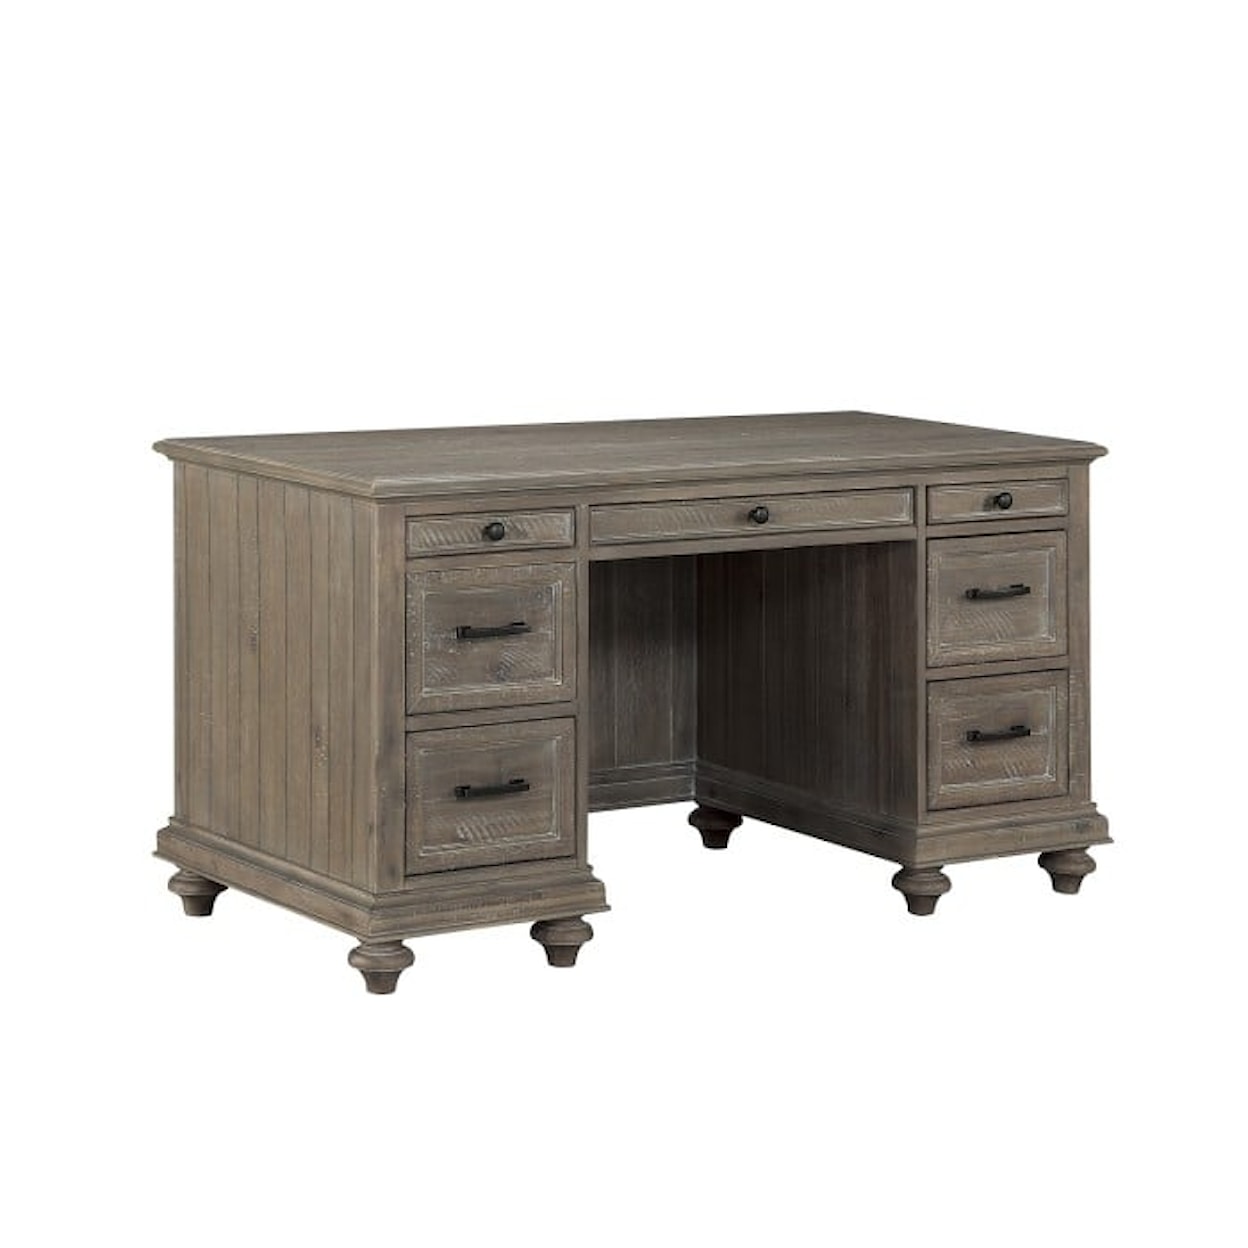 Homelegance Furniture Cardano Executive Desk